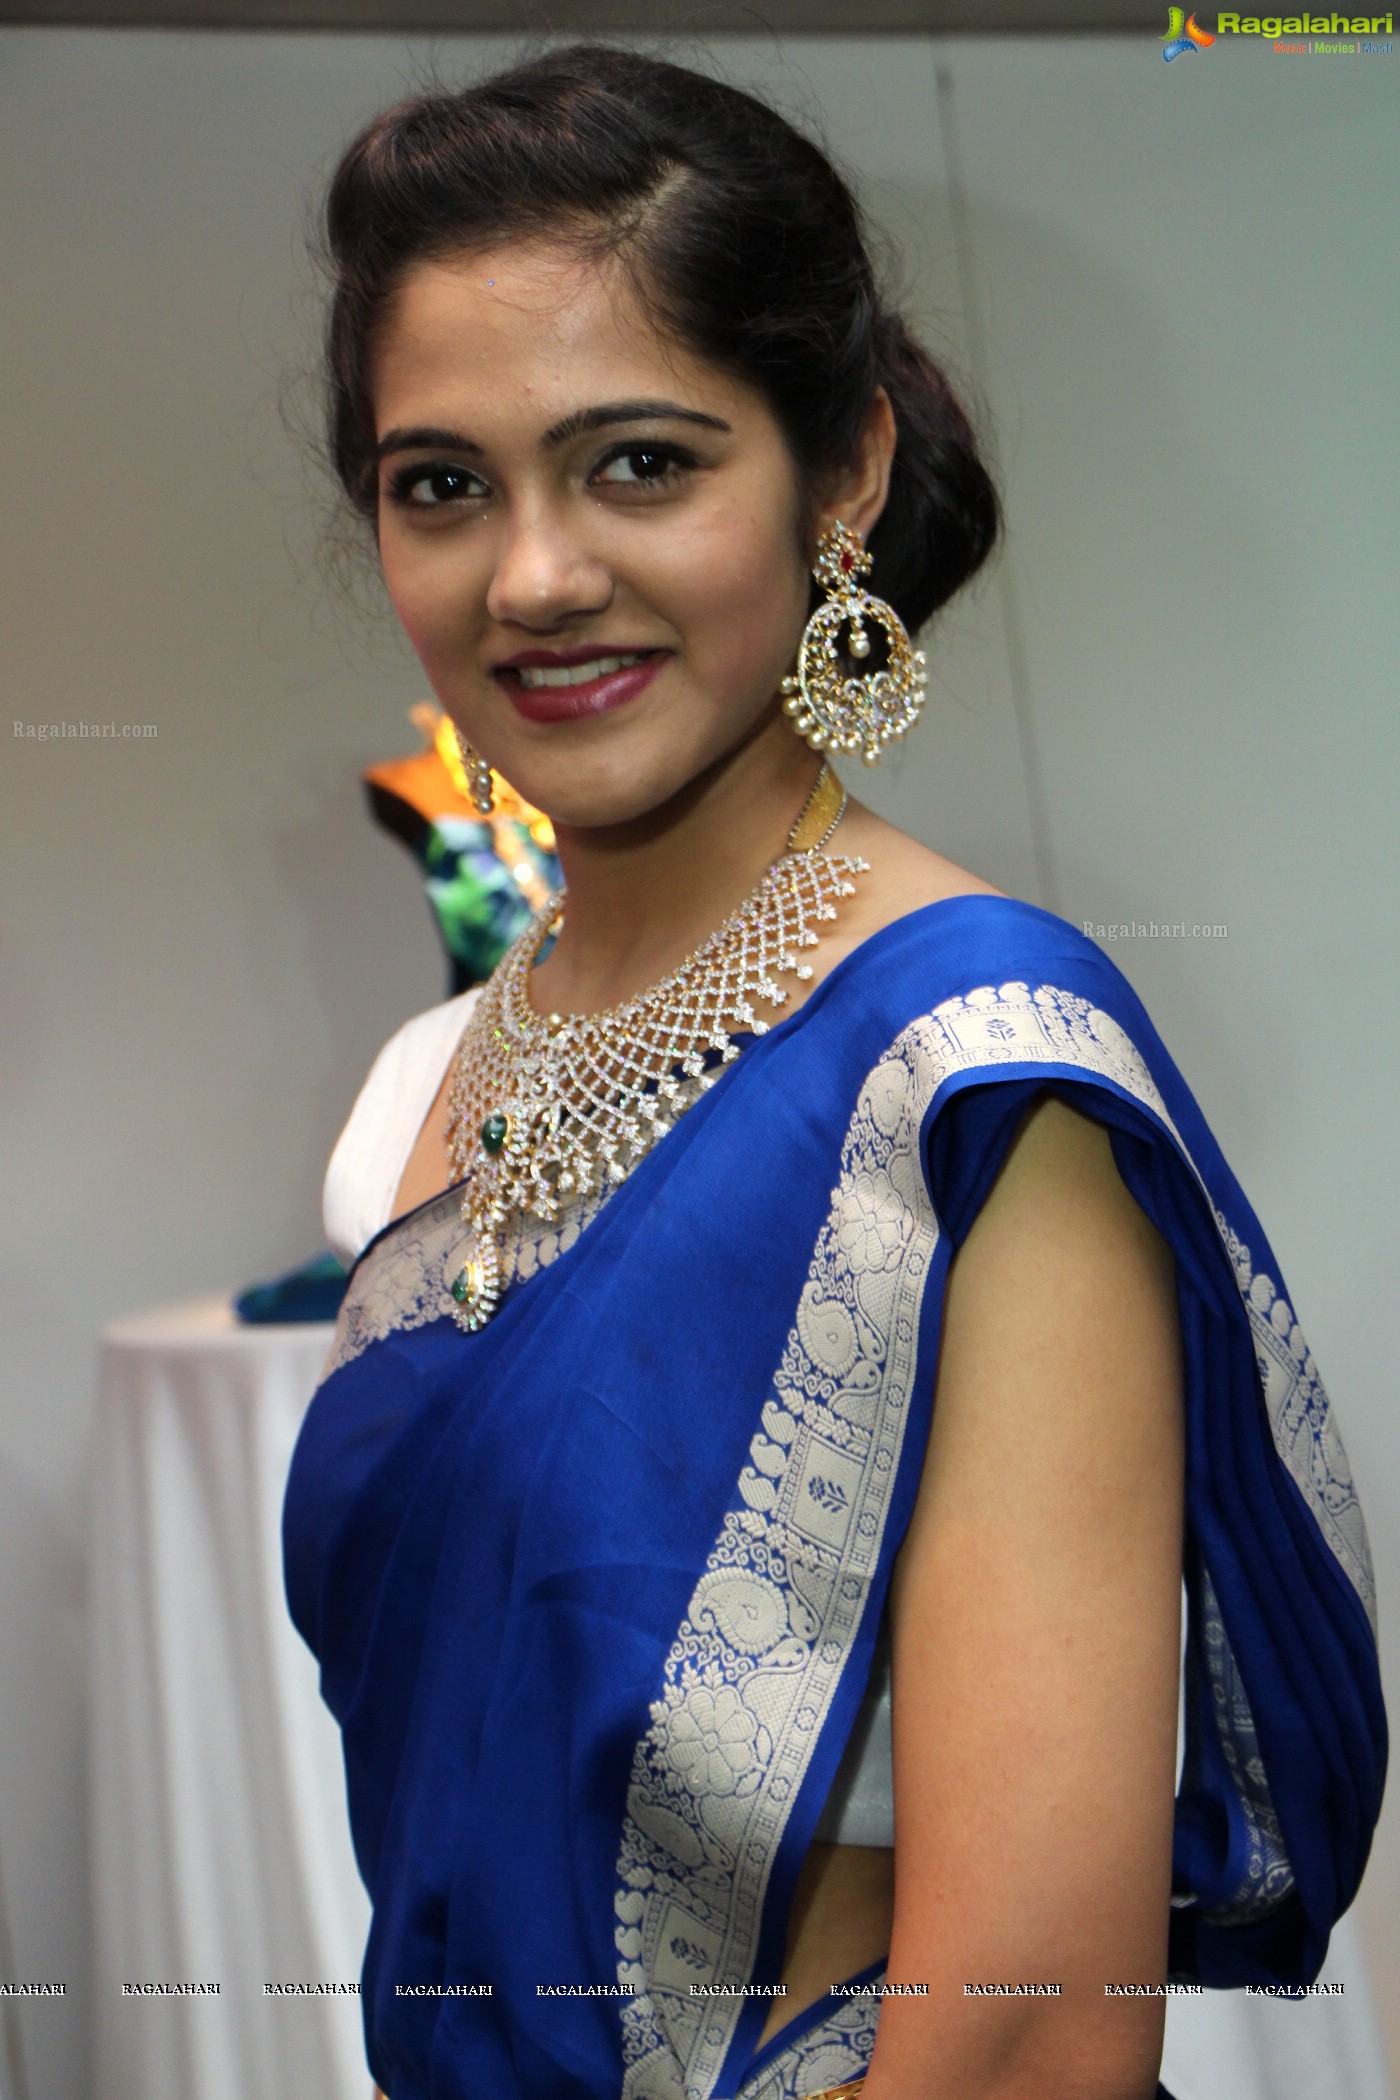 Vasundhara Diamond Roof - Wedding Jewellery Exhibition 2014 at Hotel Avasa, Hyderabad